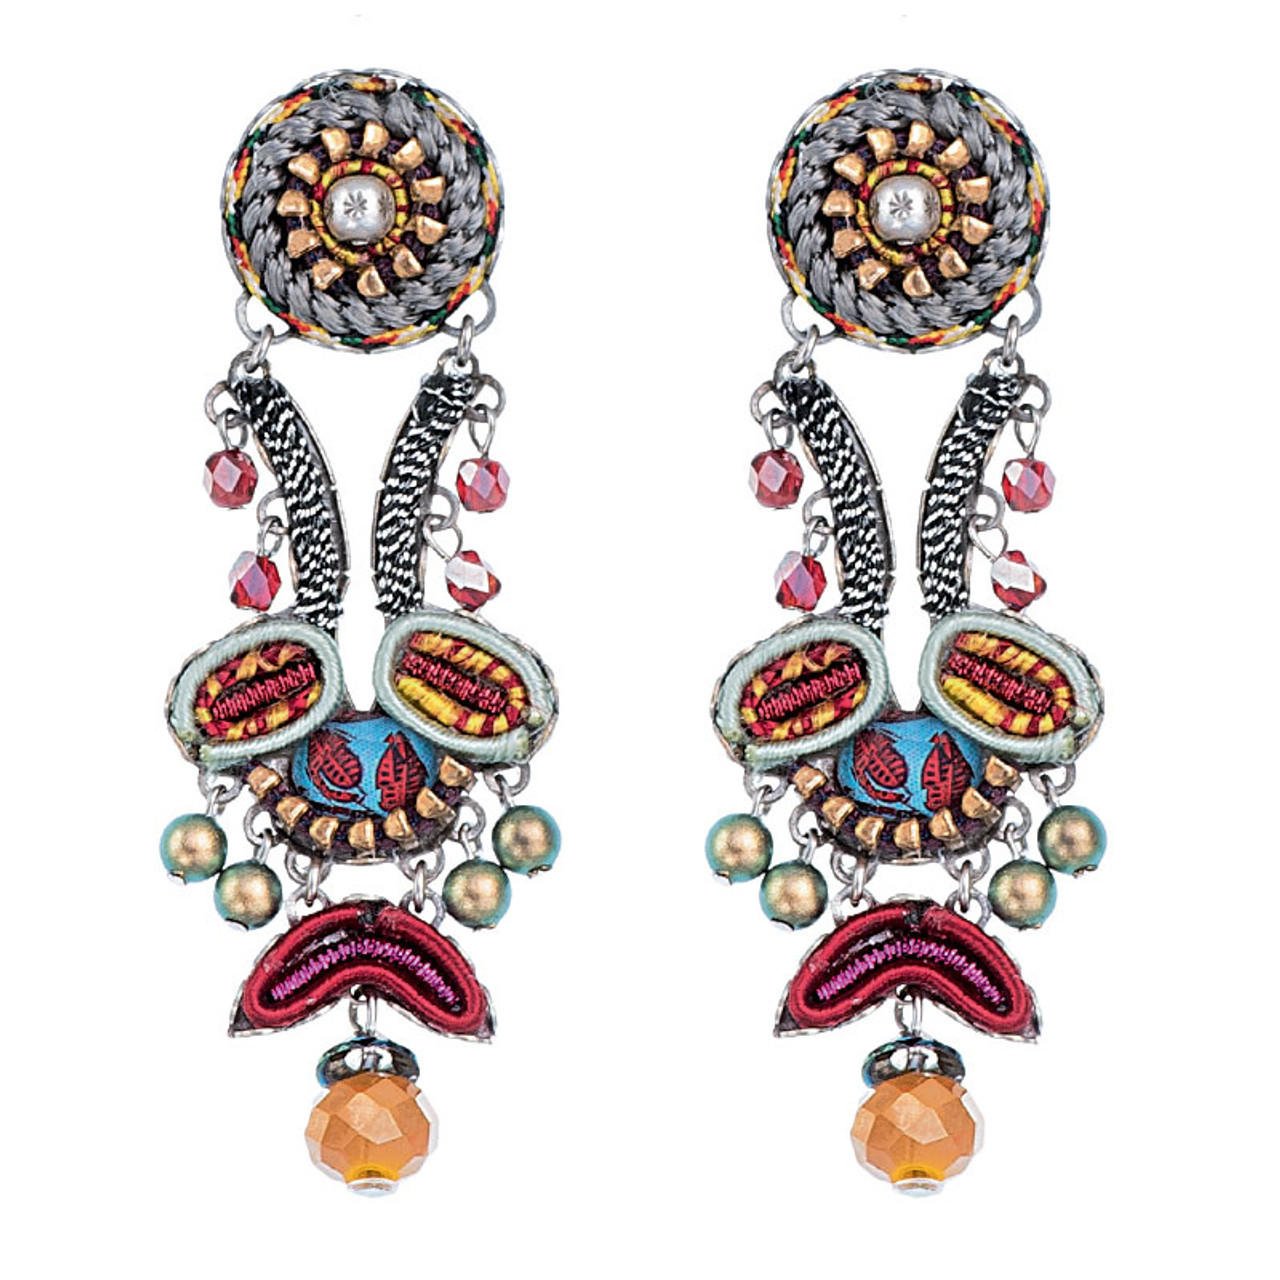 Sundazed earrings from Ayala Bar Jewelry